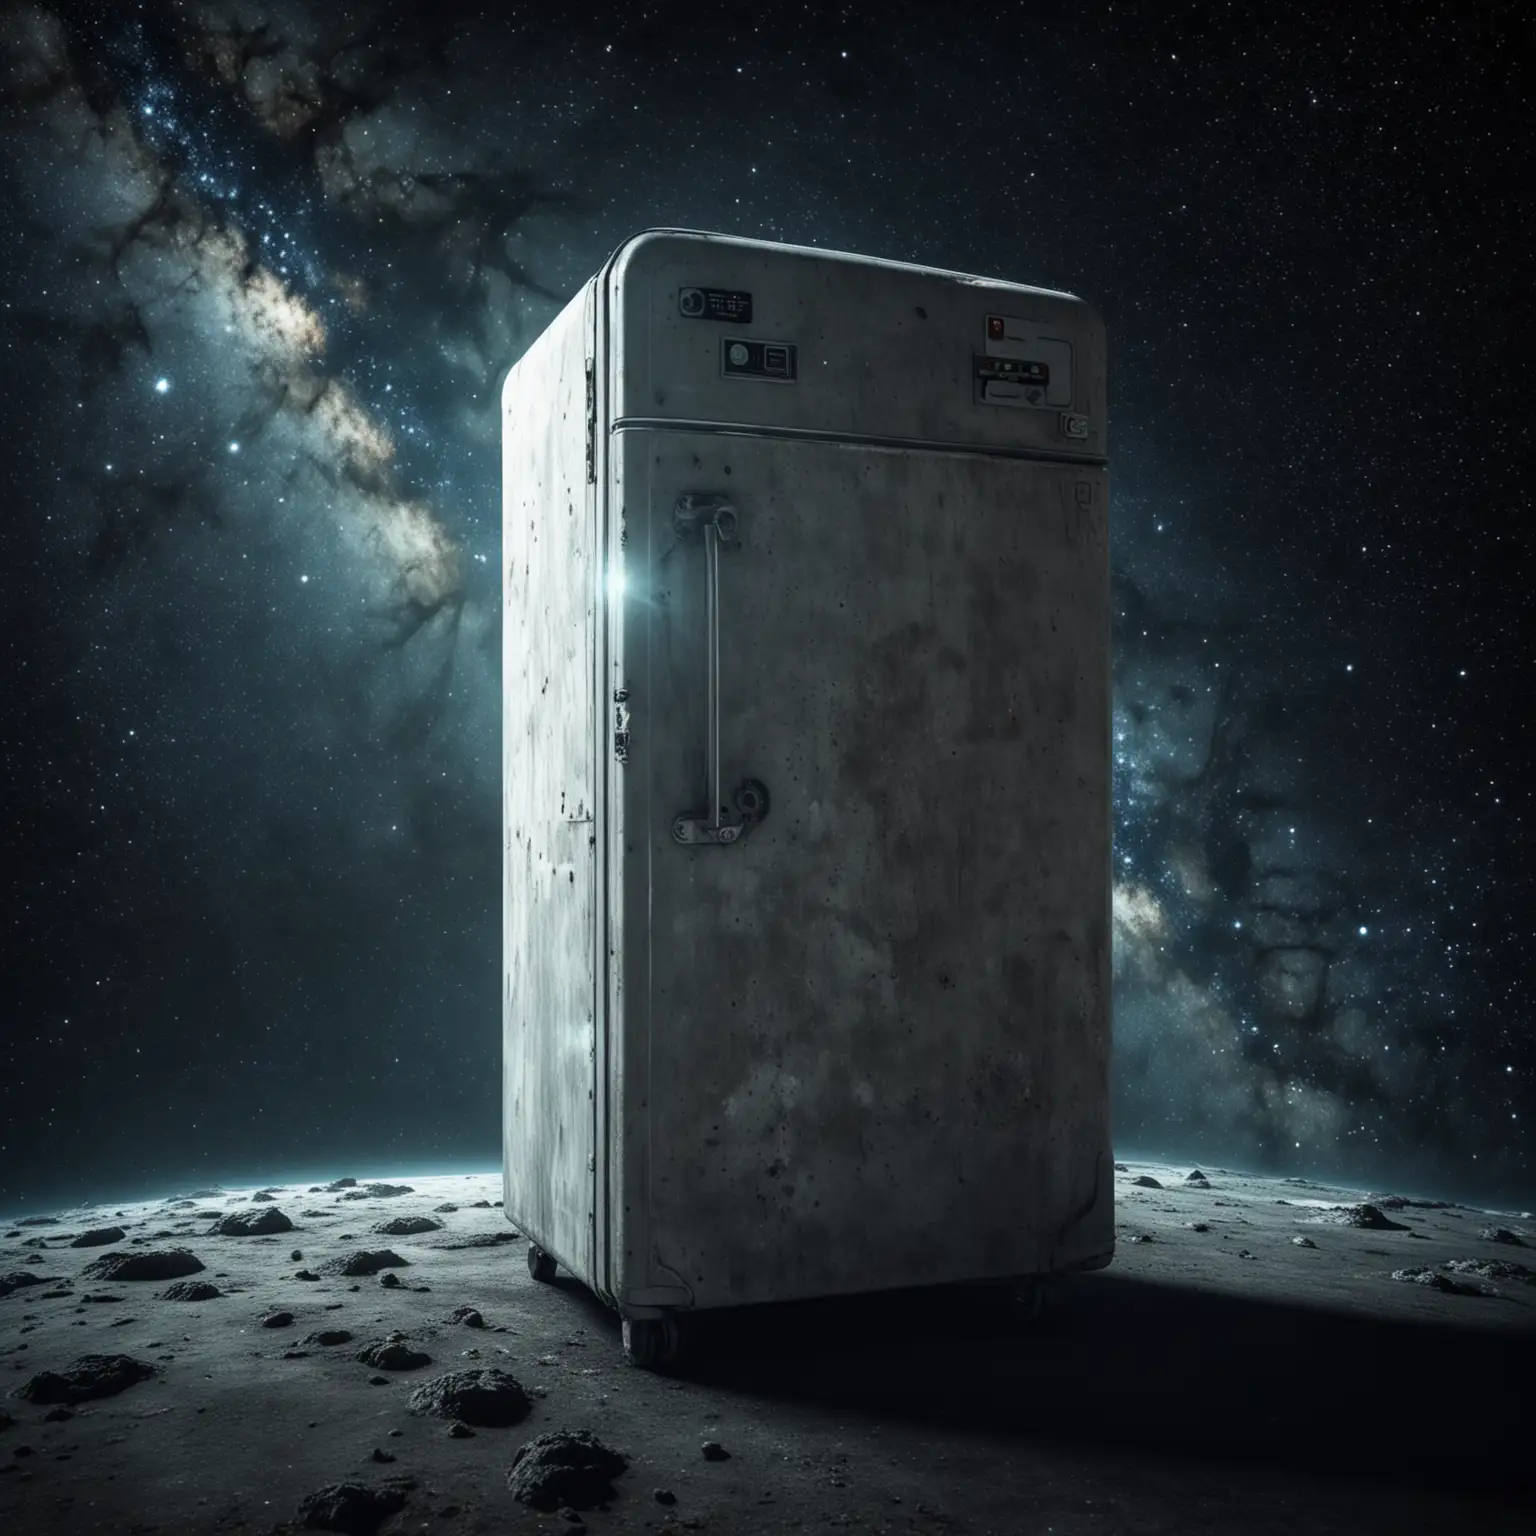 Vintage Refrigerator Drifting Through the Cosmos